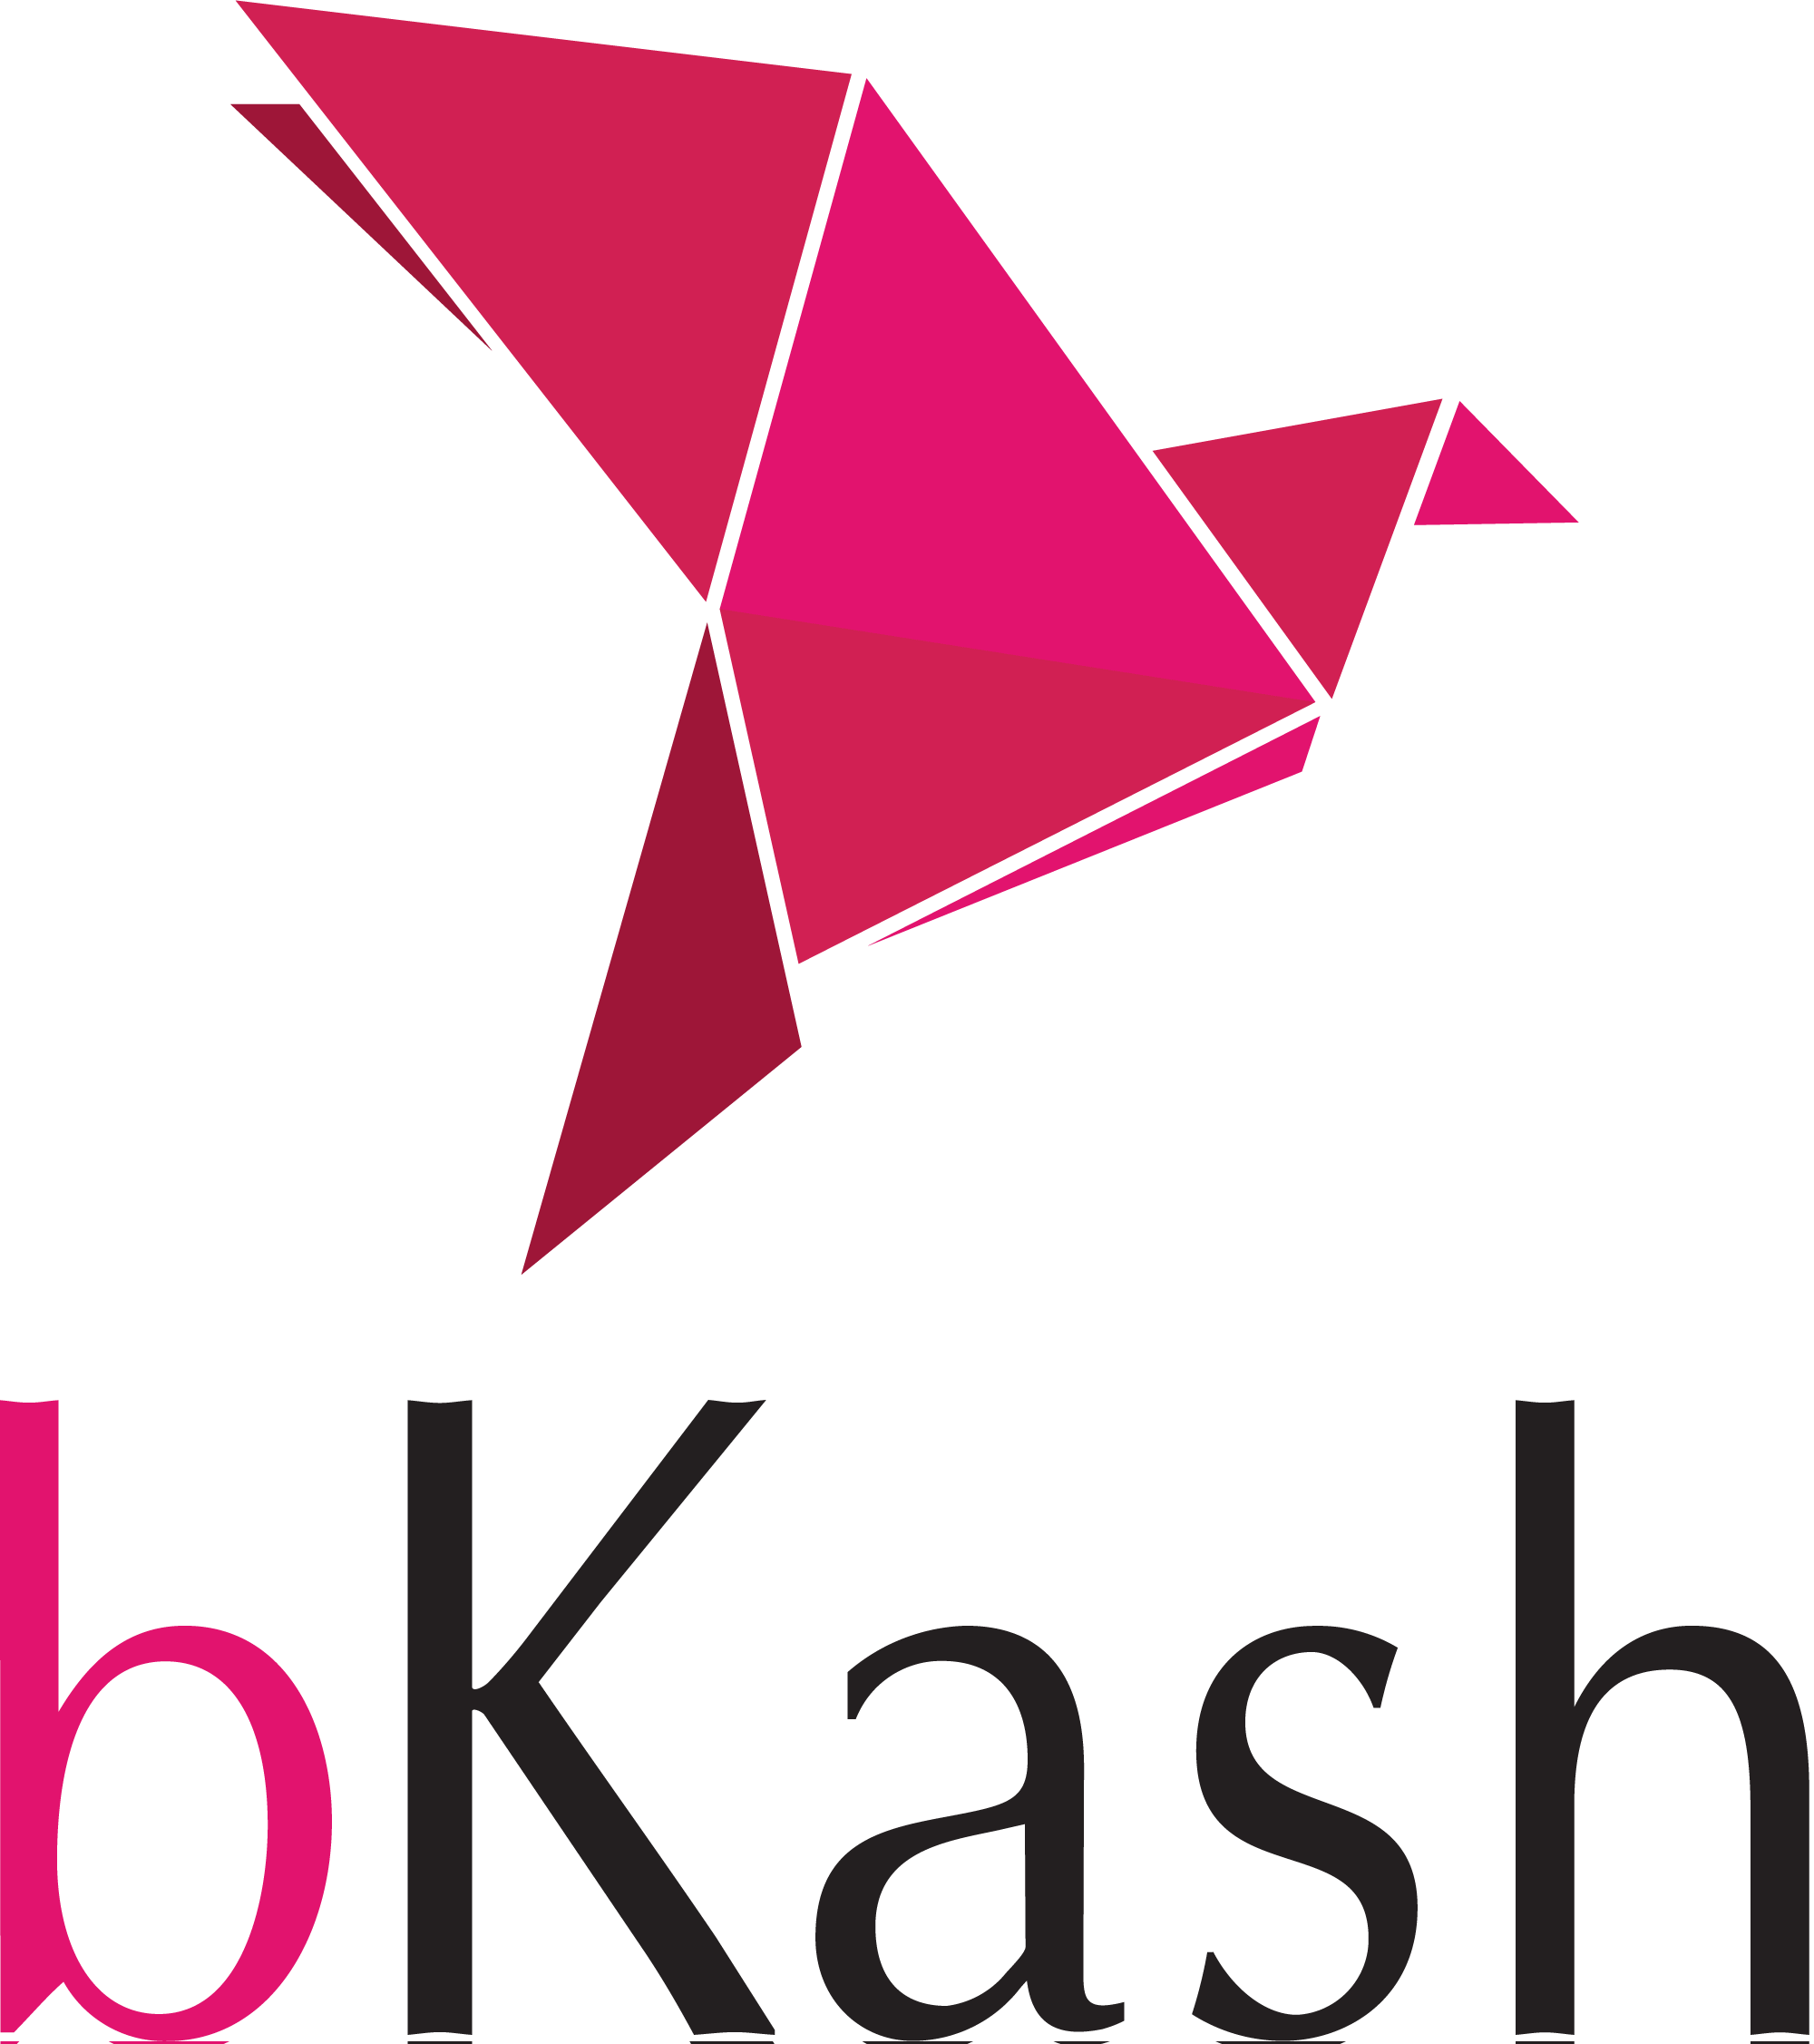 bkash logo download